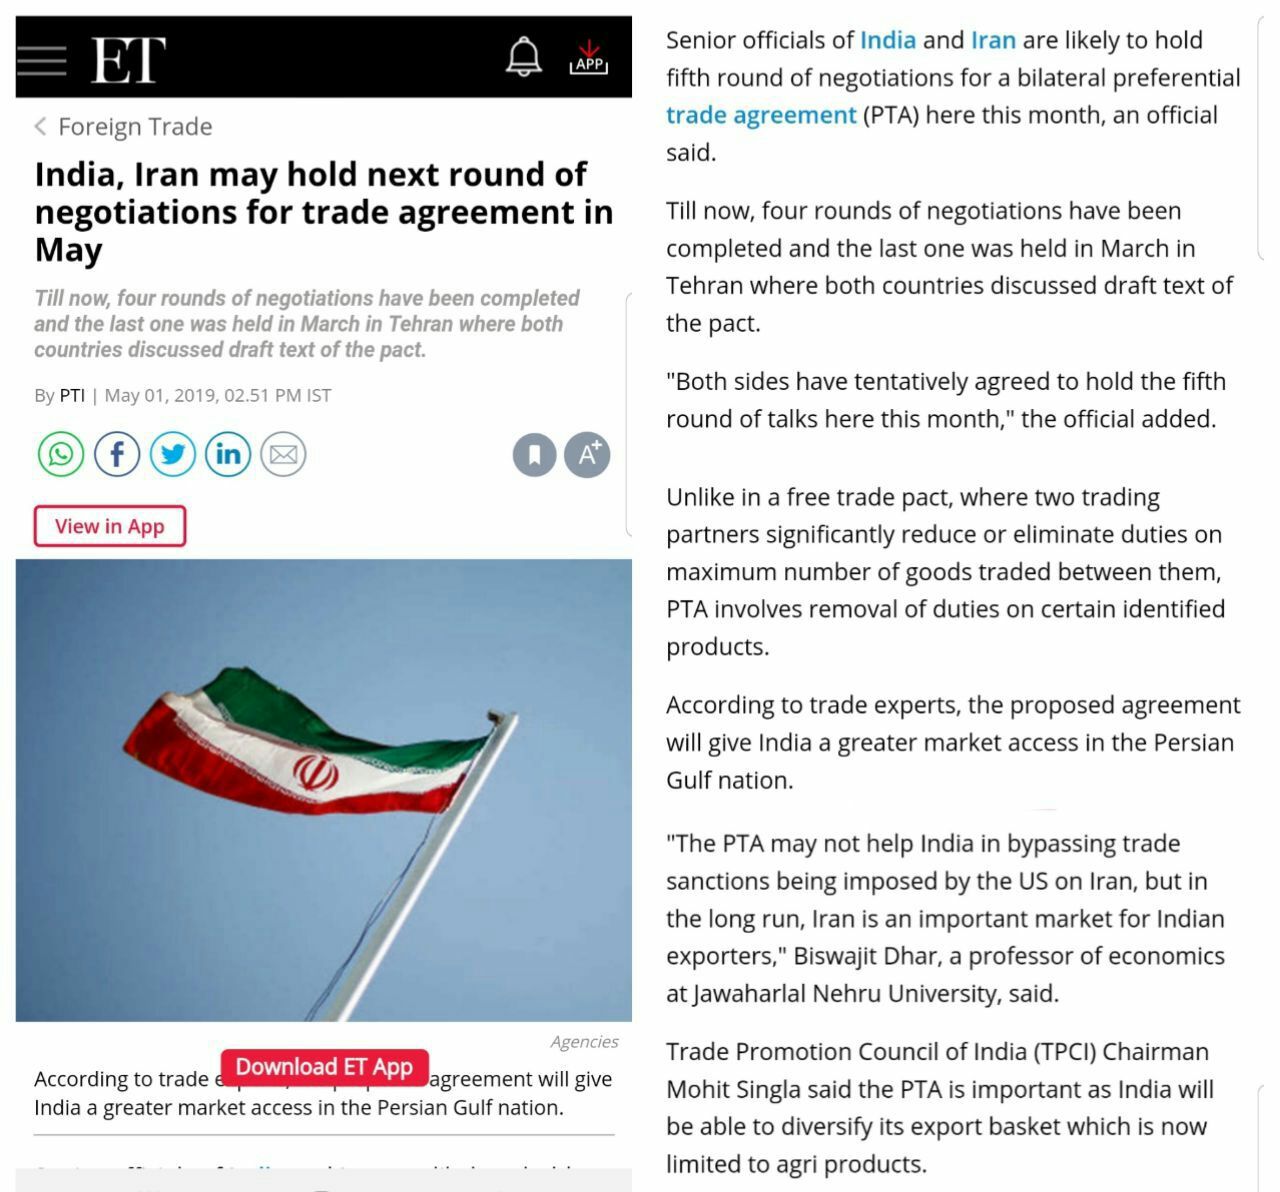 ♦️پنجمین دور از مذاکرات مربوط به توافقات دوجانبه تجاری بین ایران و هند در این ماه برگزار می‌گردد و هدف آن، حذف تعرفه‌ها در برخی کالاهاست.